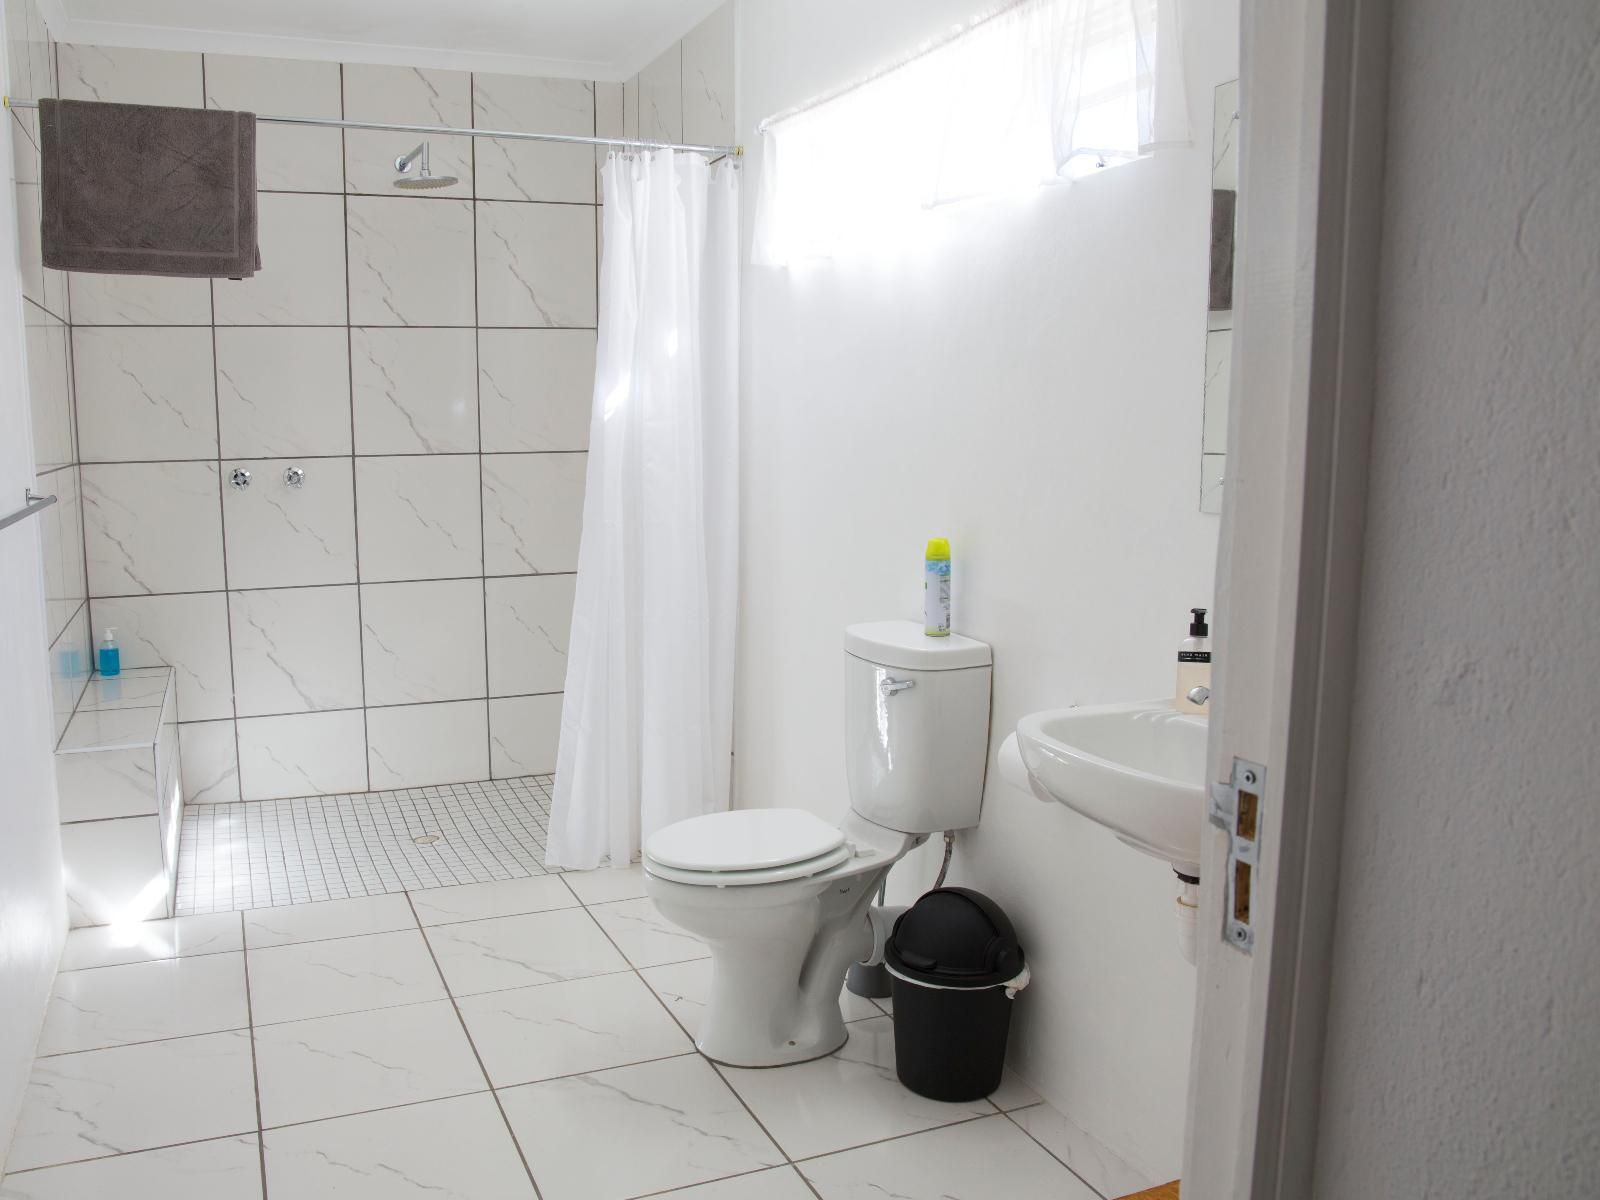 Roode Bloem Farm House Graaff Reinet Eastern Cape South Africa Colorless, Bathroom